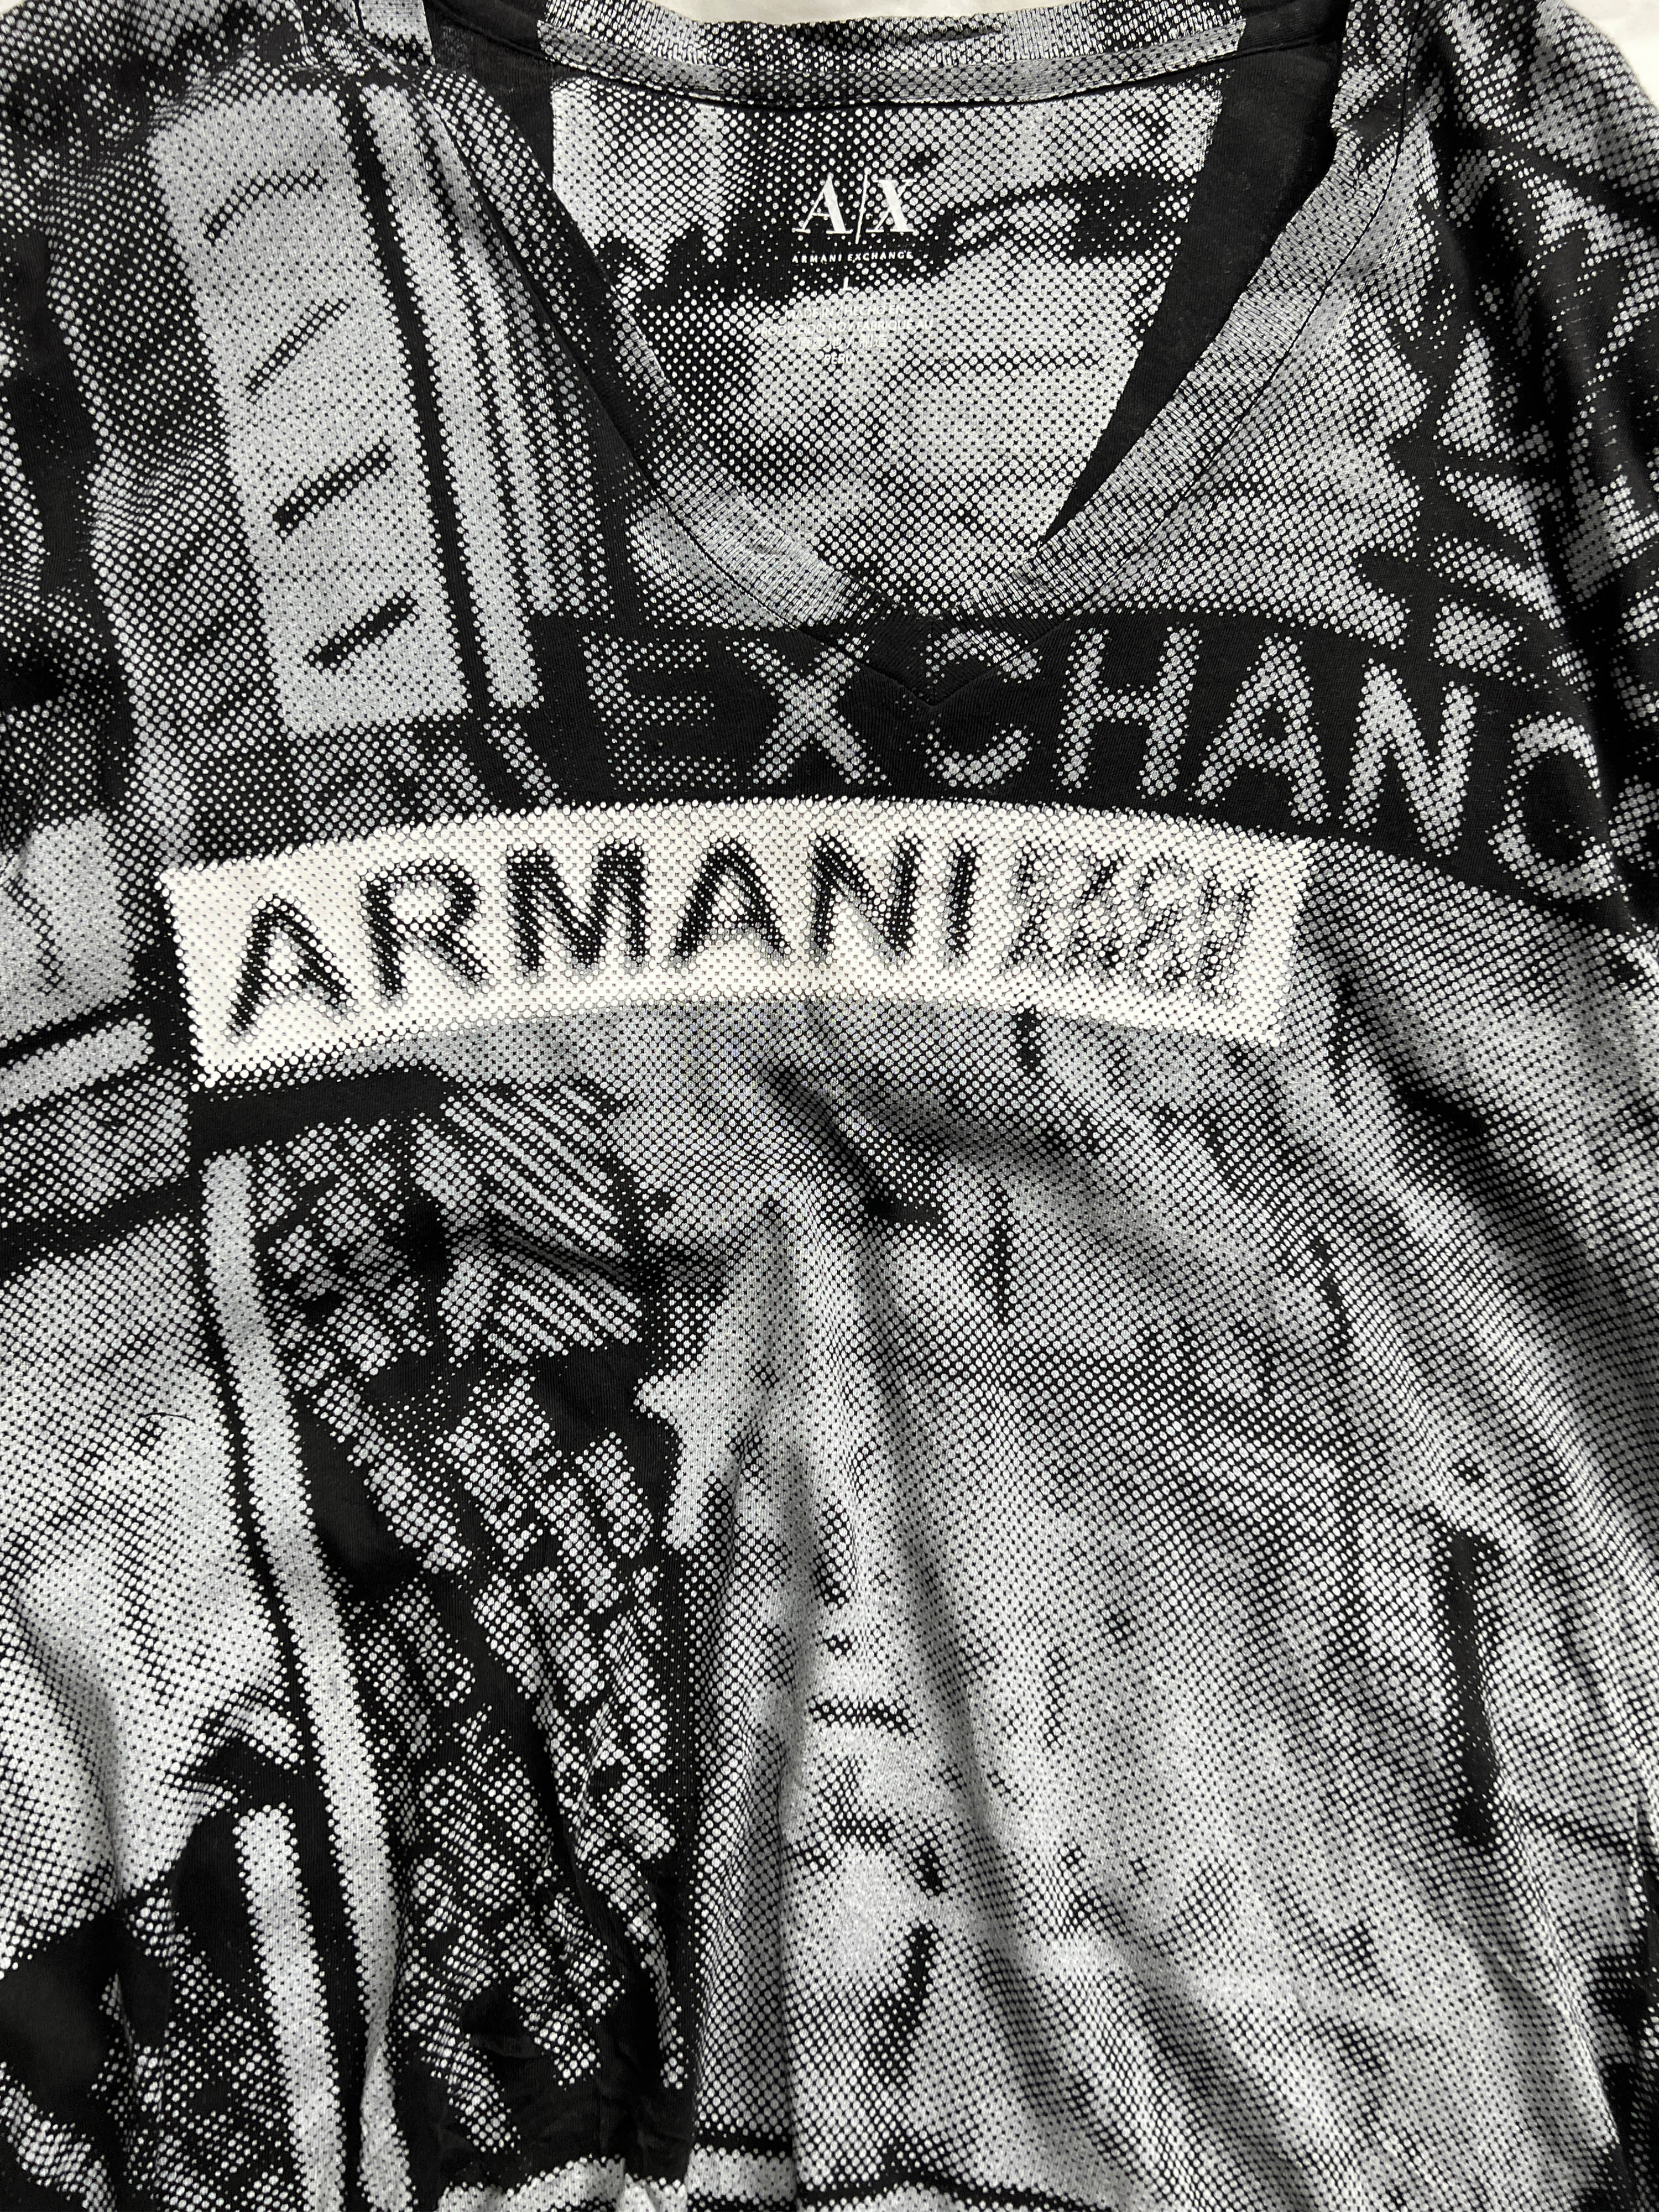 Armani Exchange full printing t-shirts